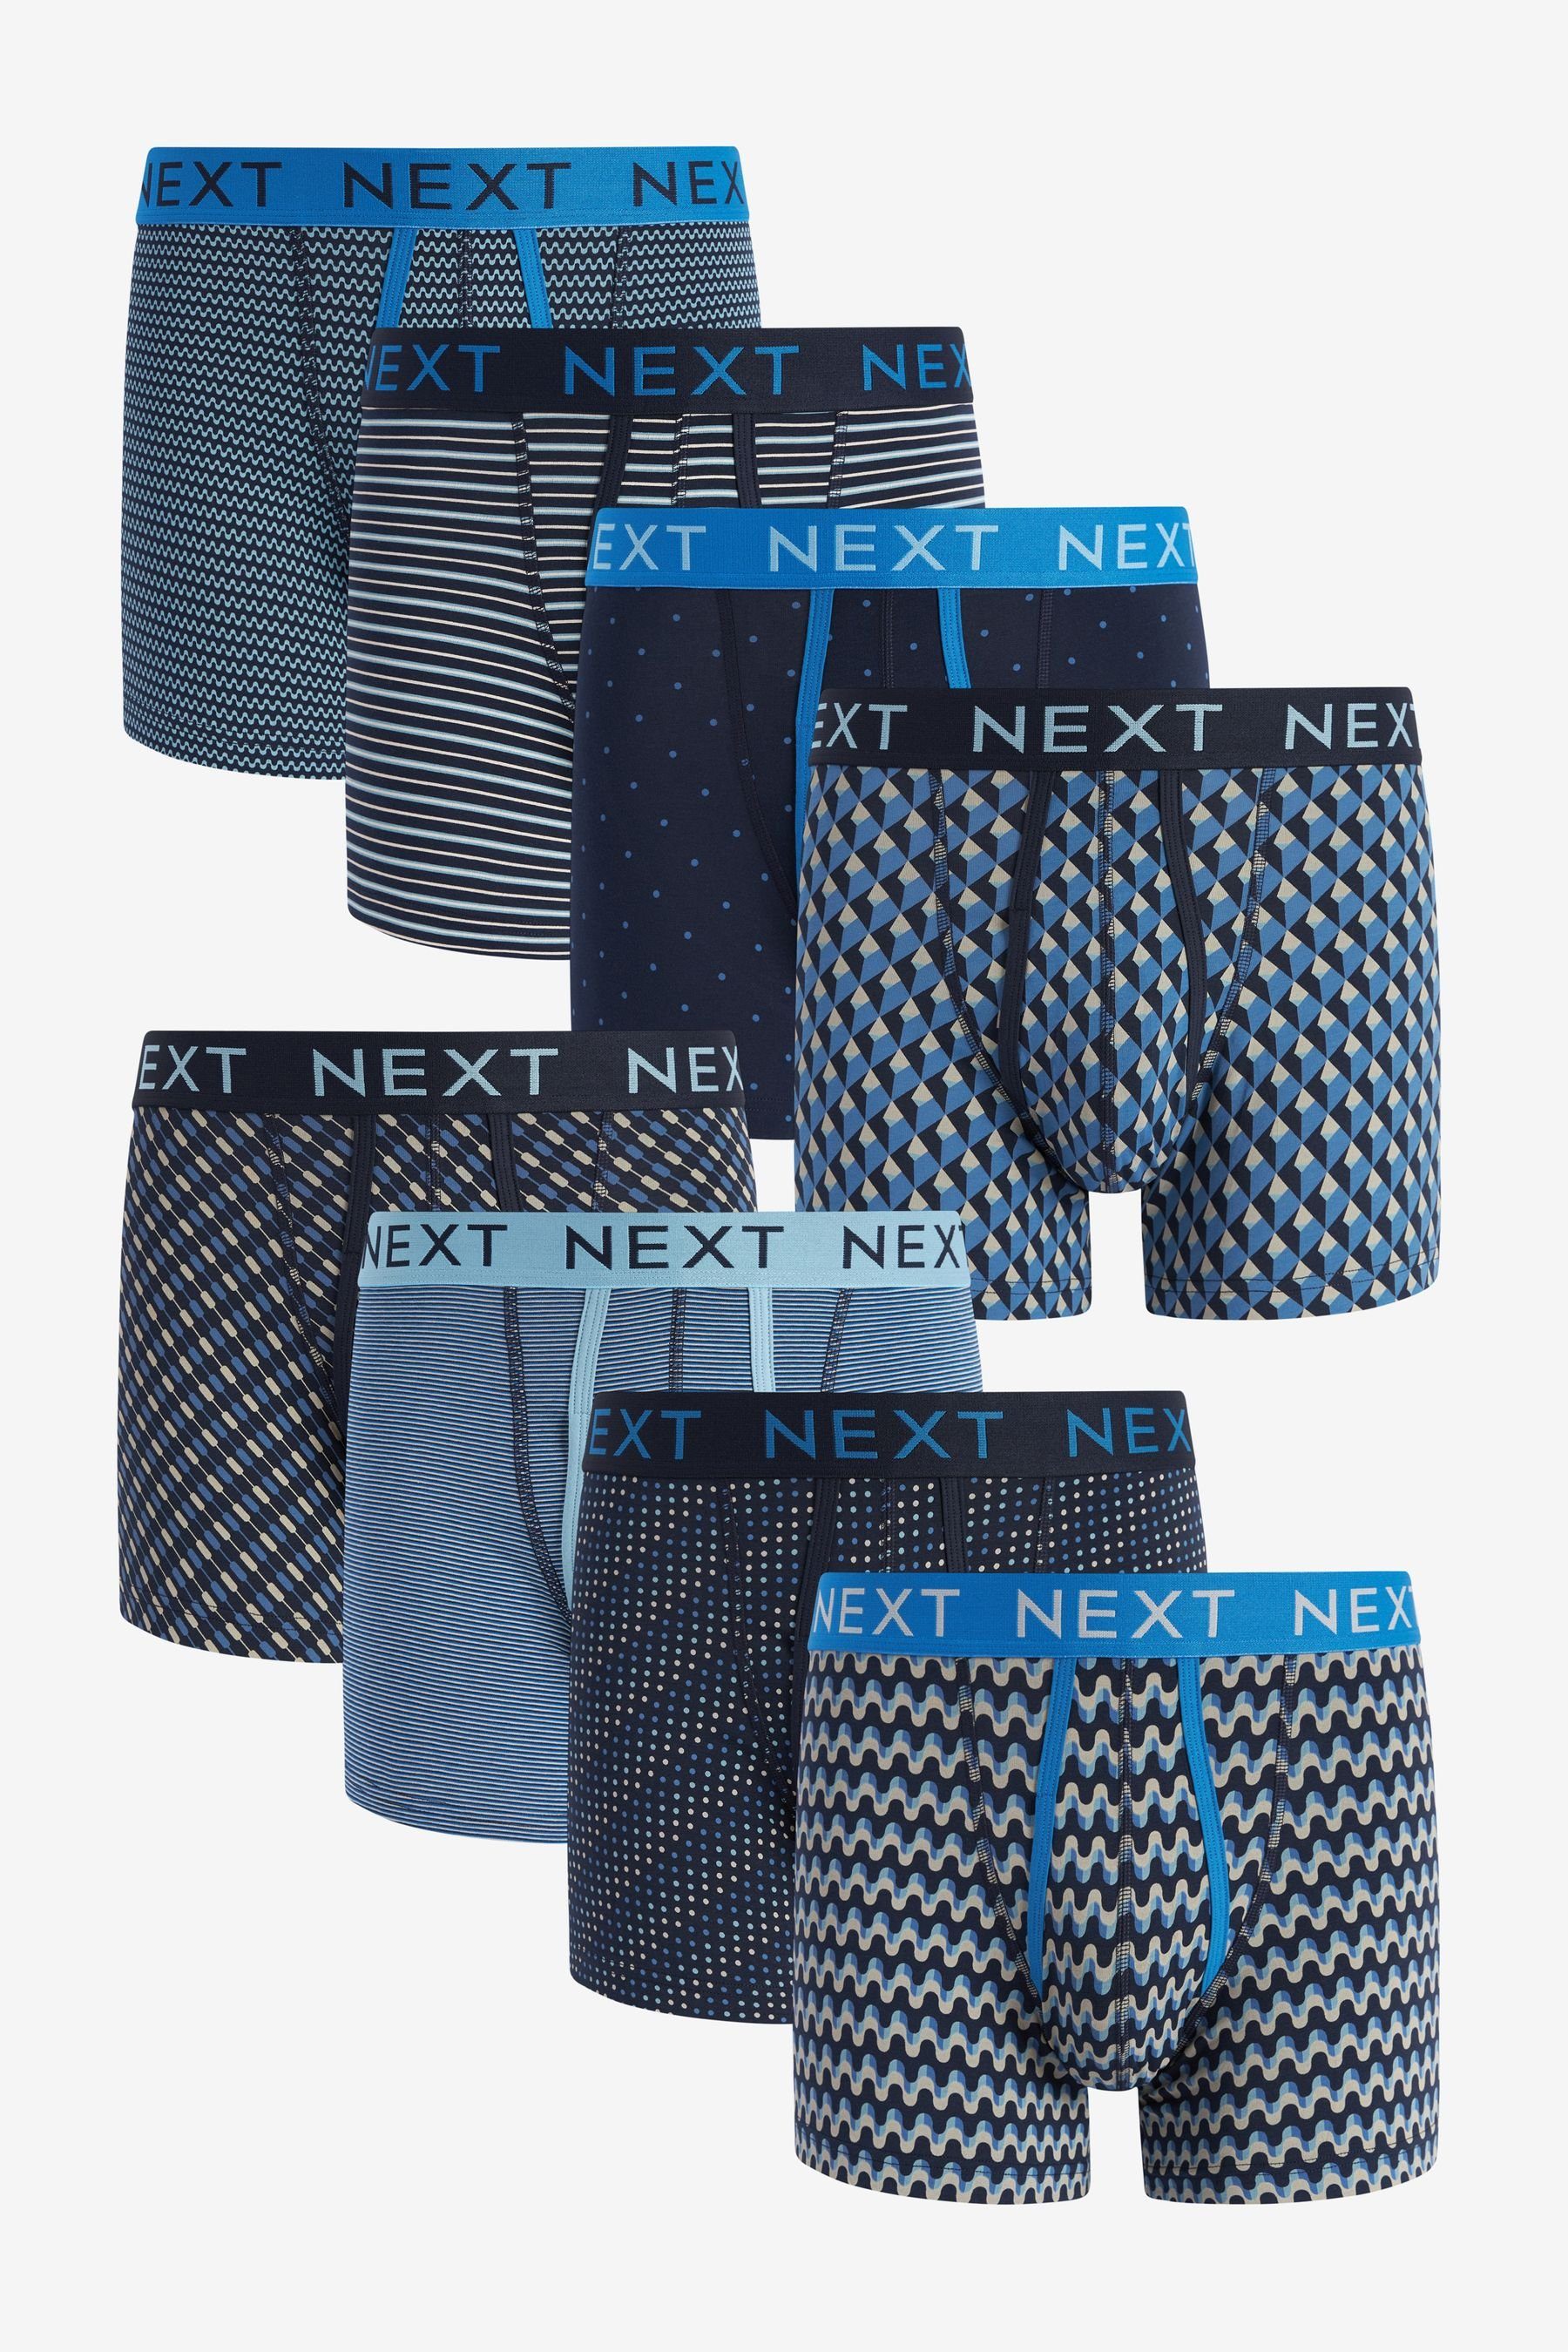 A-Front Boxershorts, Next Boxershorts (8-St) Pattern Blue 8er-Pack